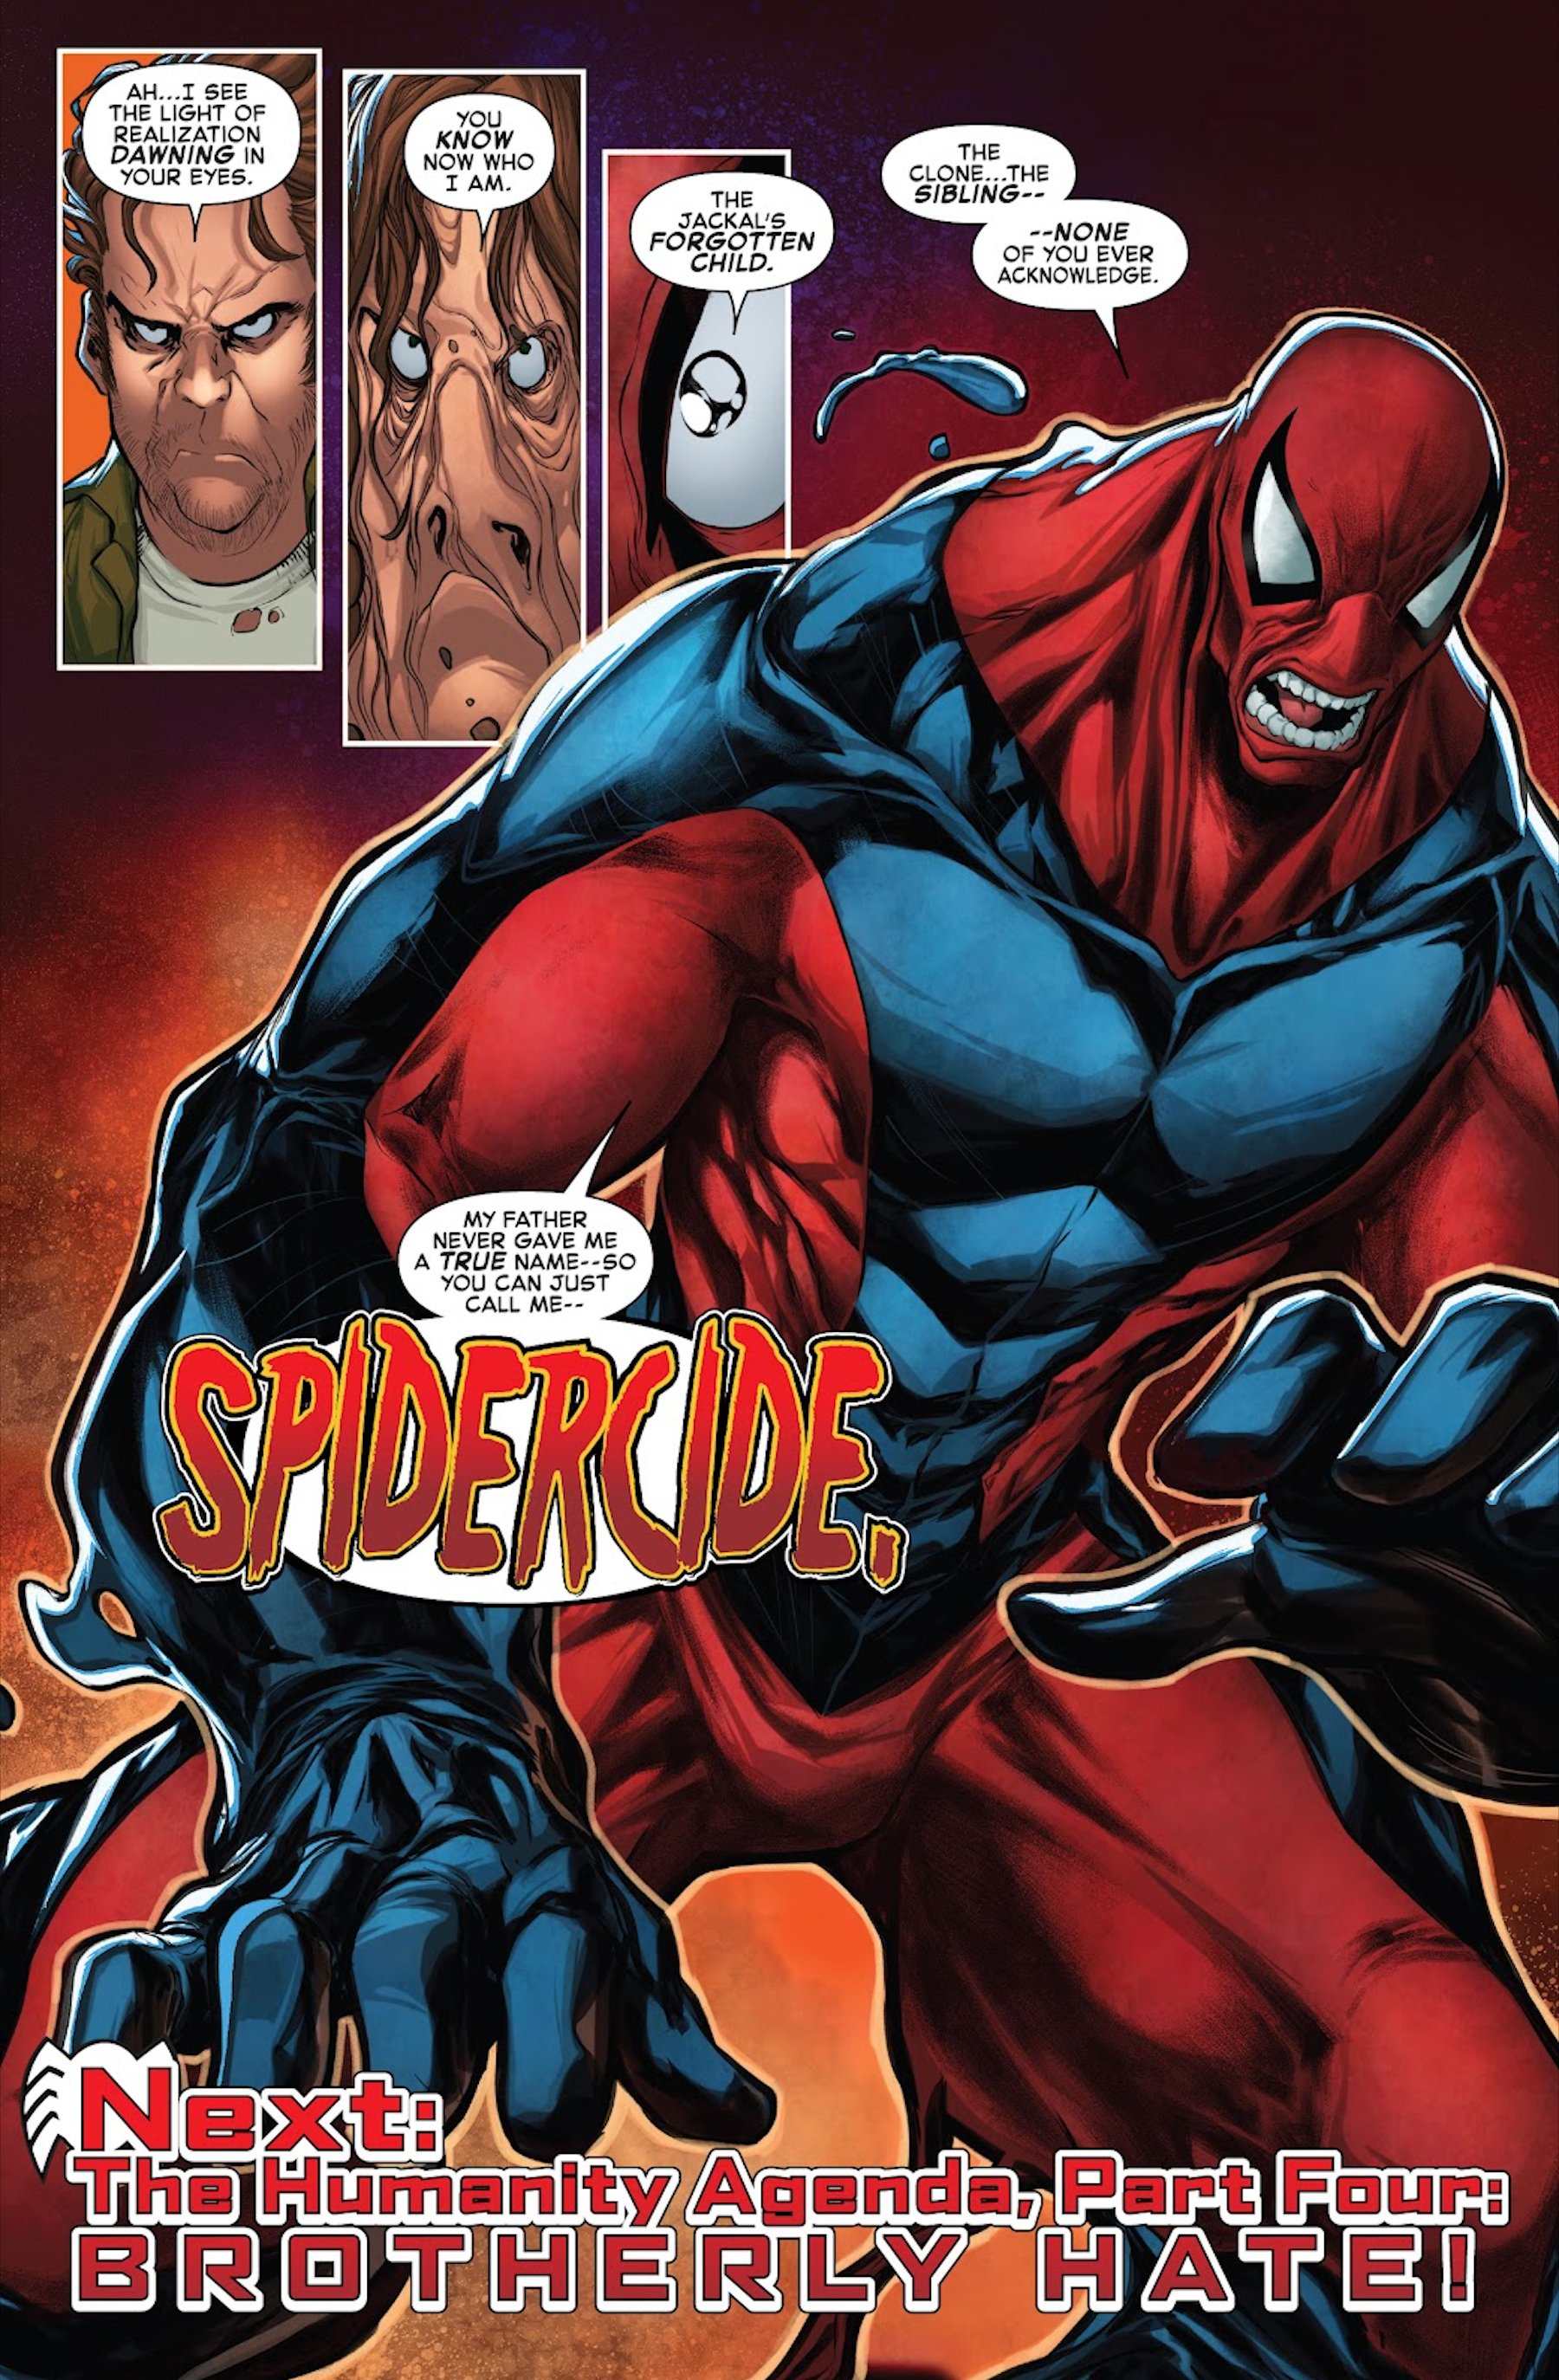 Spider-Man’s Strangest Clone Has Returned To Marvel’s Universe